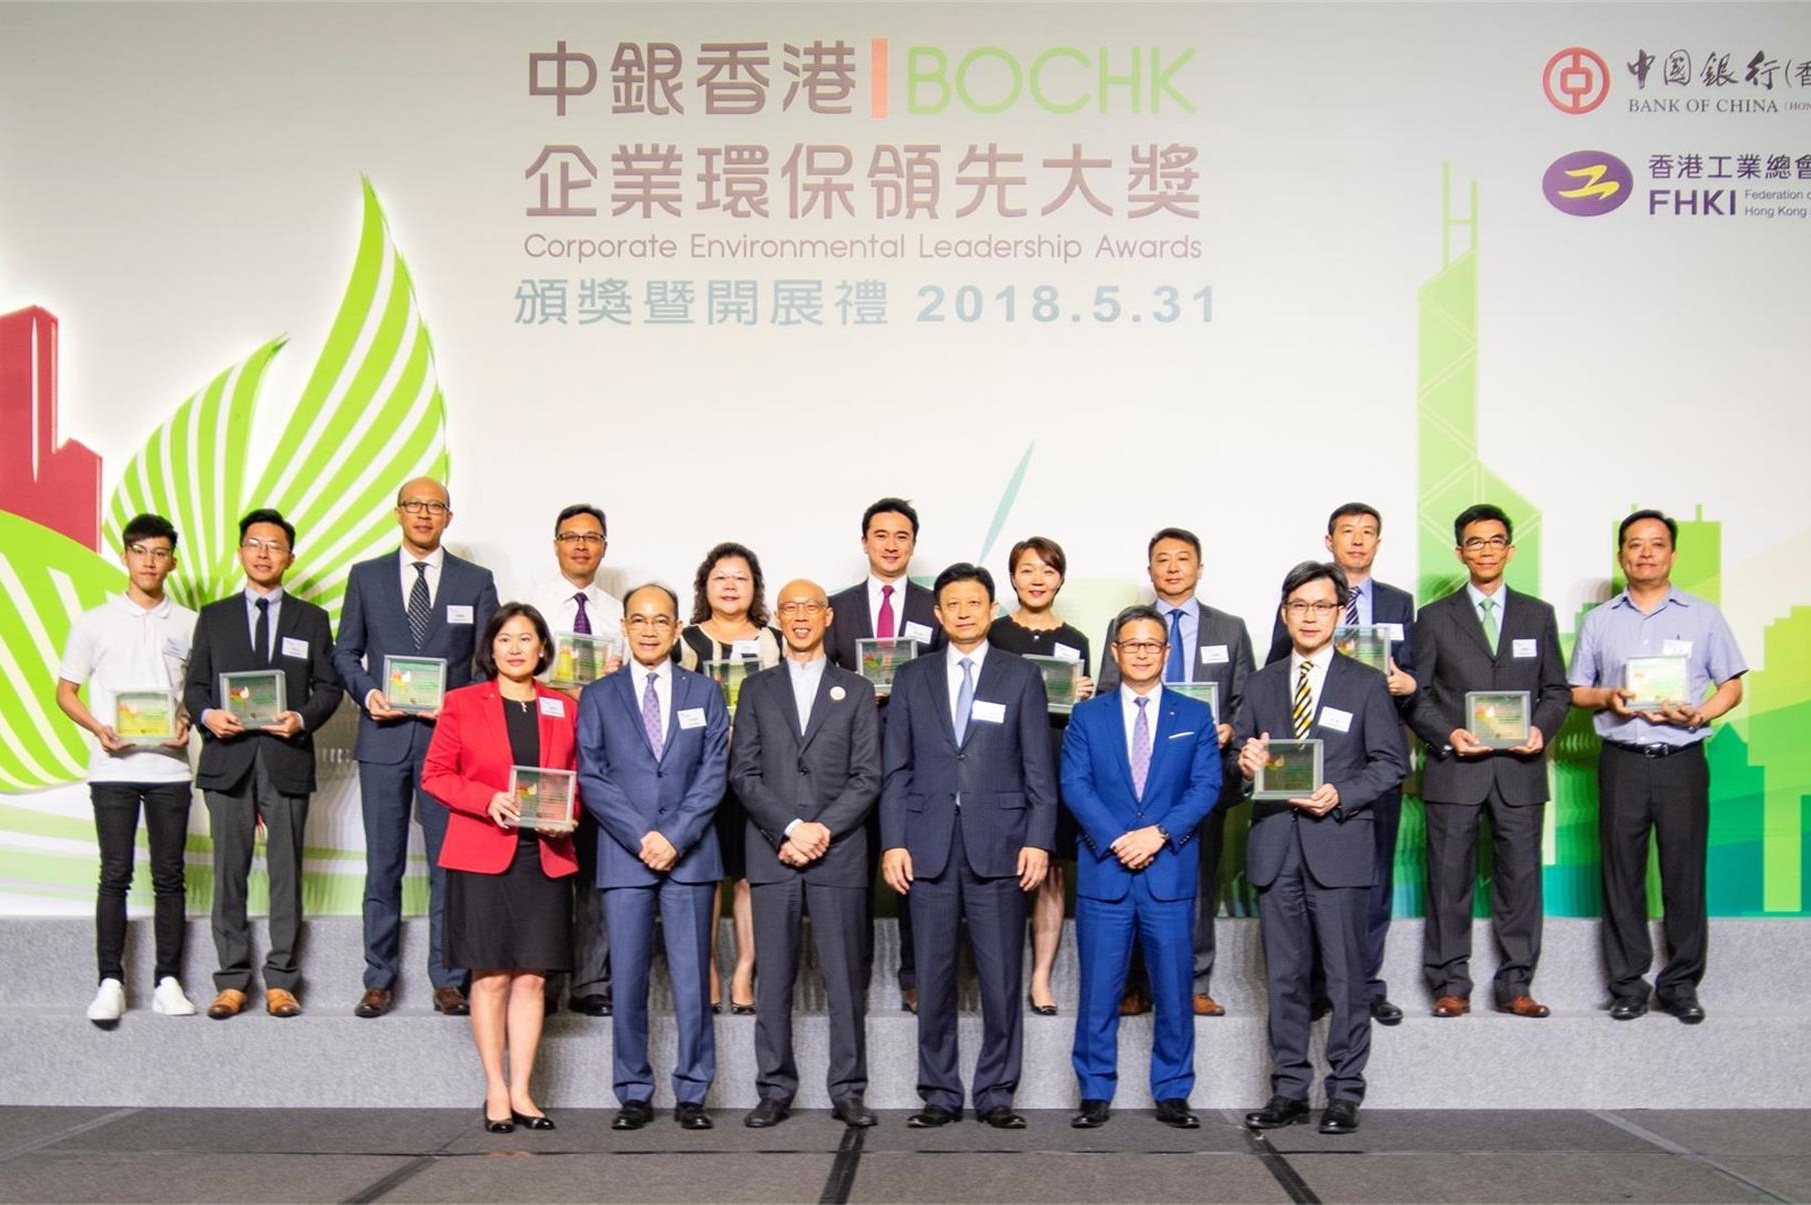 BOCHK Corporate Environmental Leadership Awards